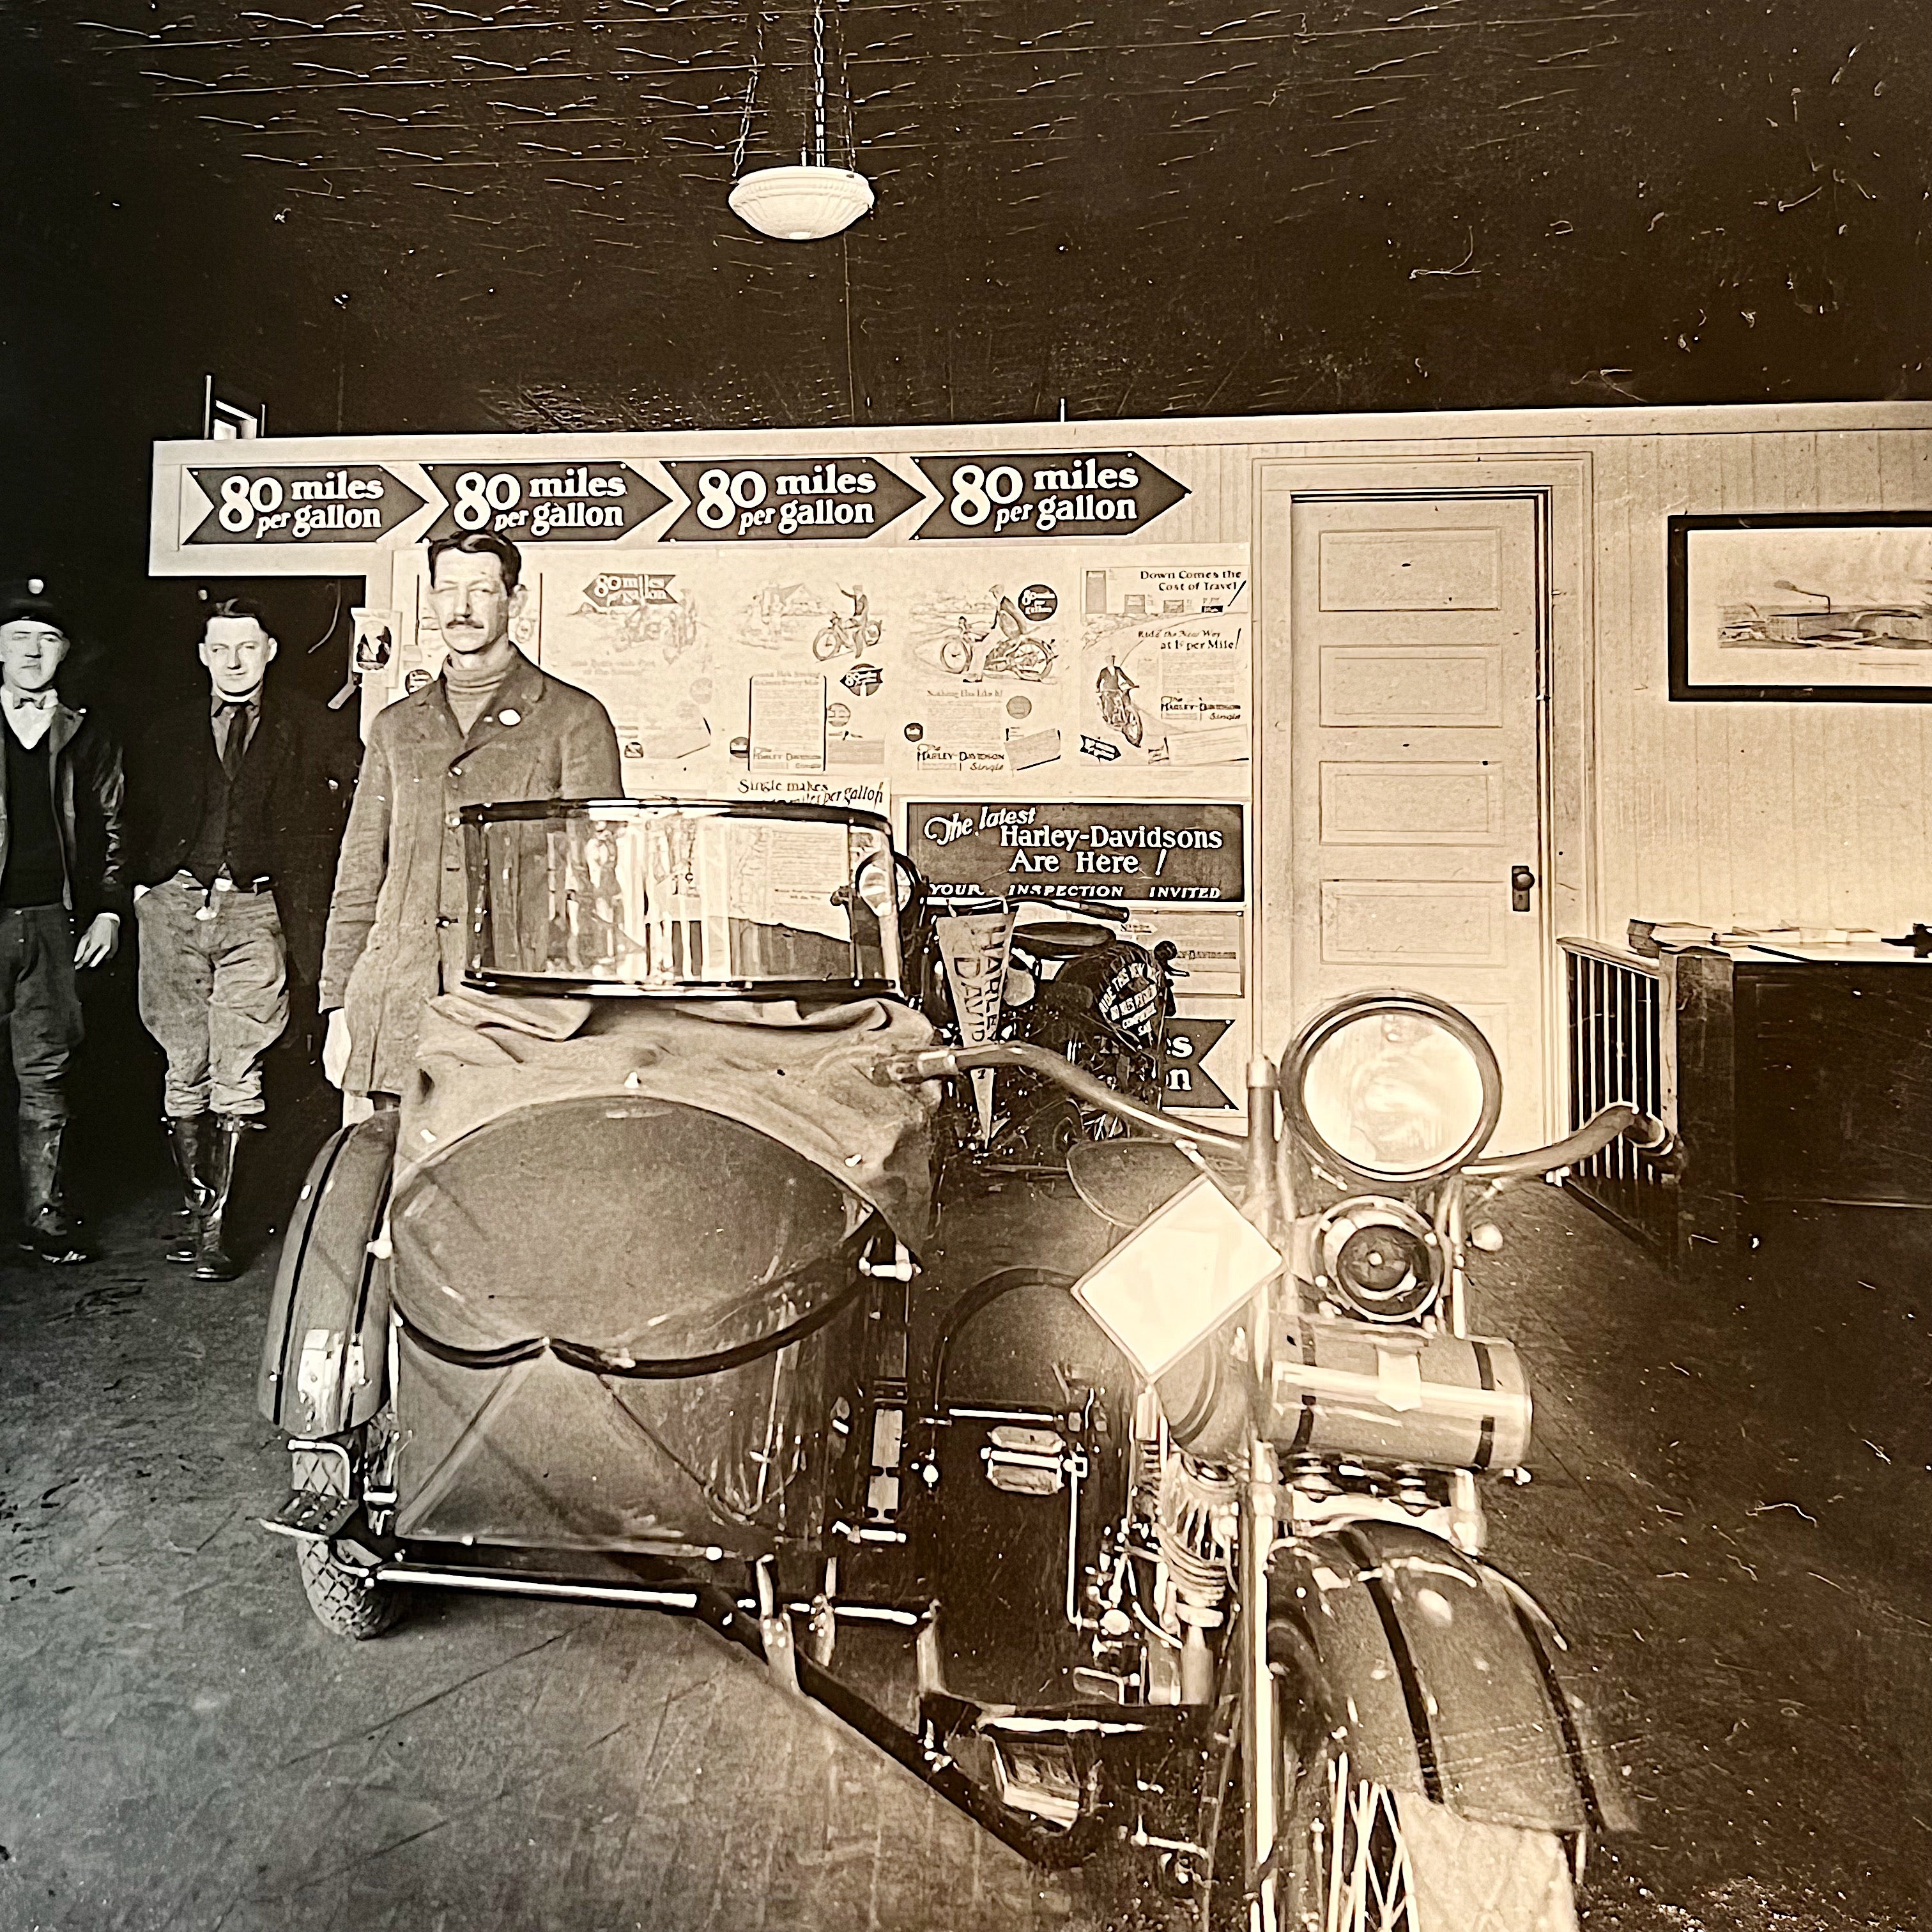 Antique Harley Davidson Dealer Photograph from 1920s Minneapolis - Rare Interior Motorcycle Shop Photography - 80 Miles Per Gallon Advert Alternate